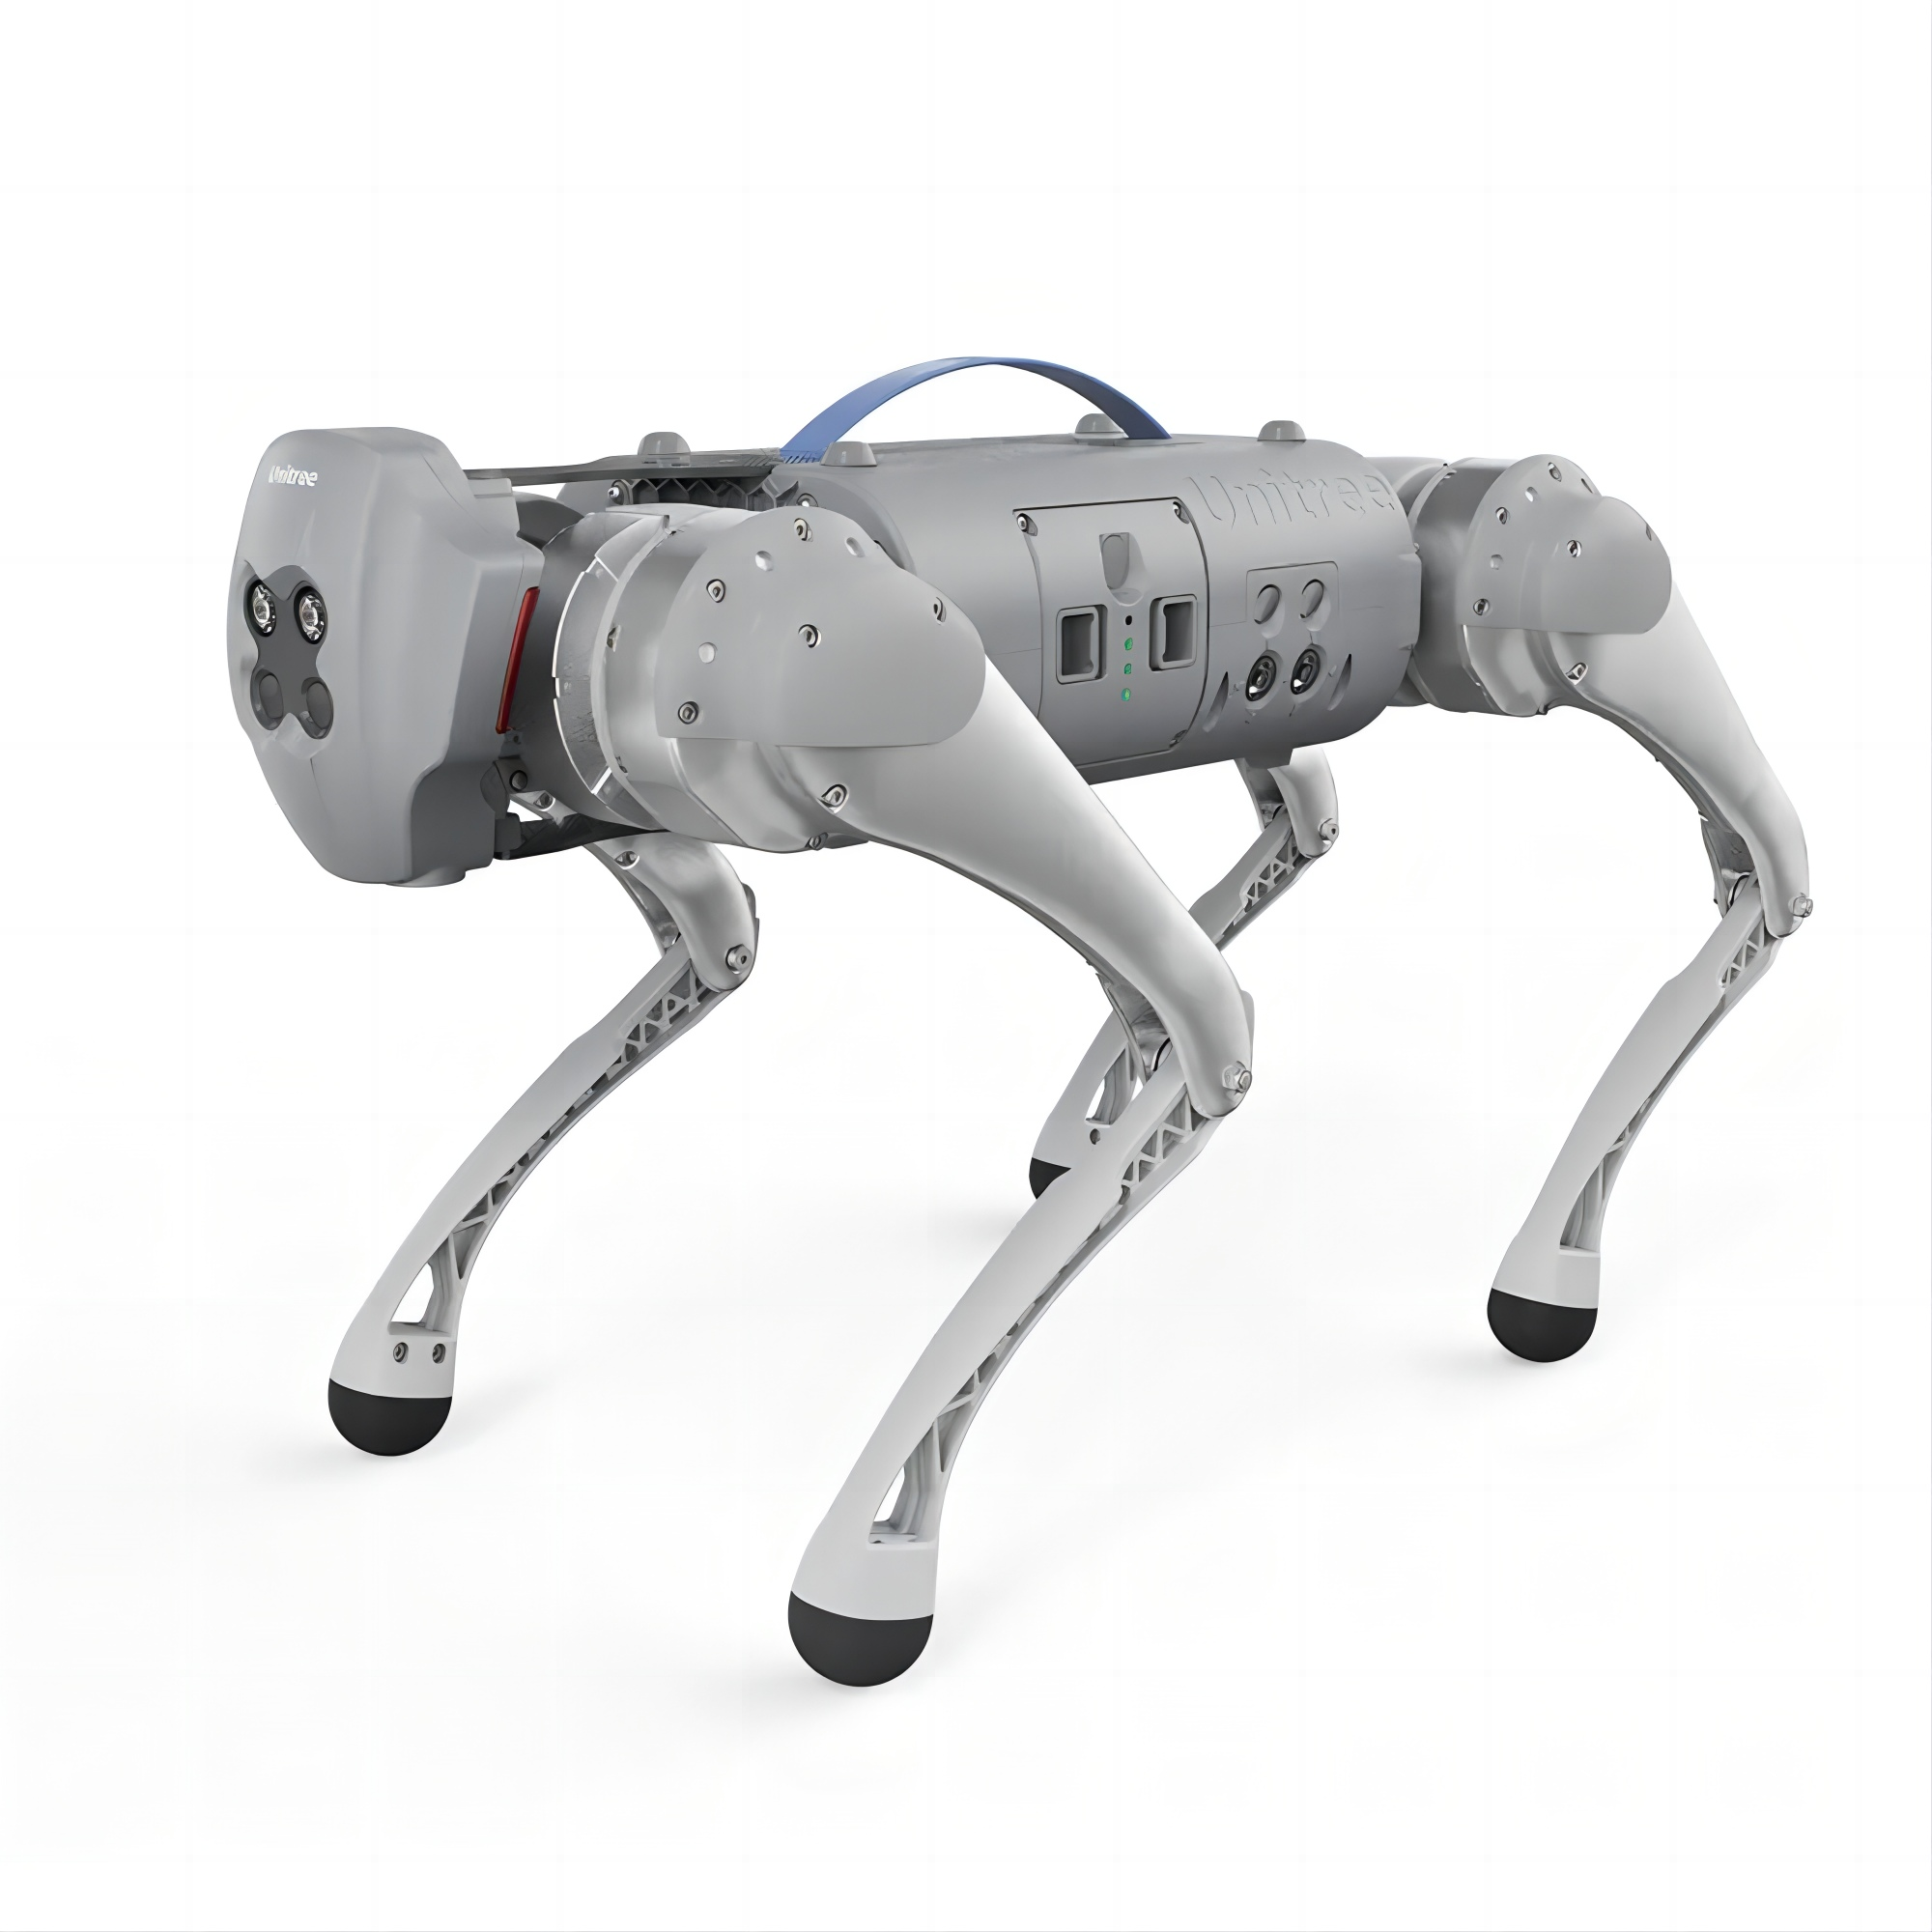 robot dog